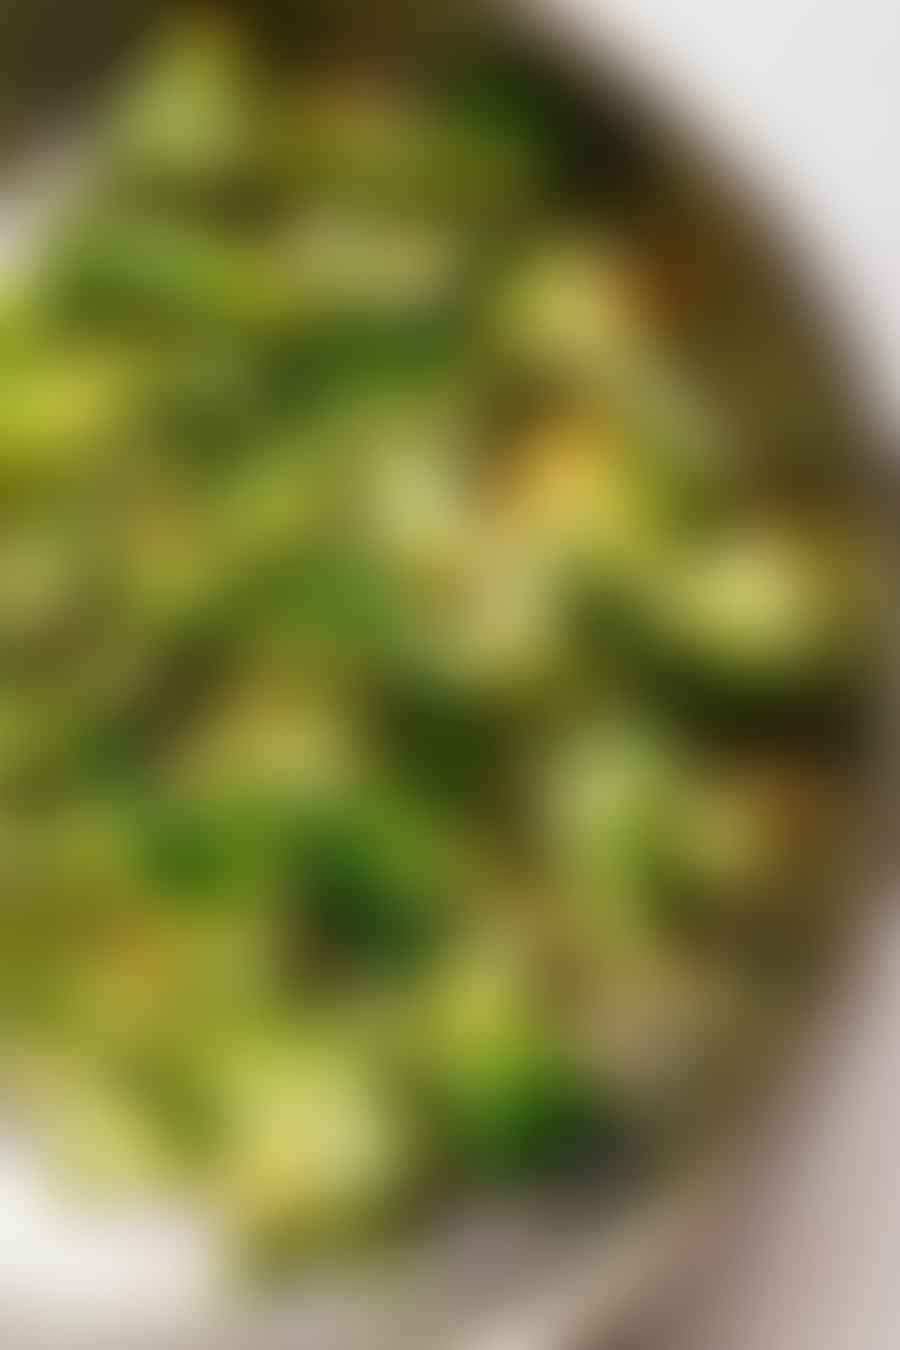 Broccoli wok recipes